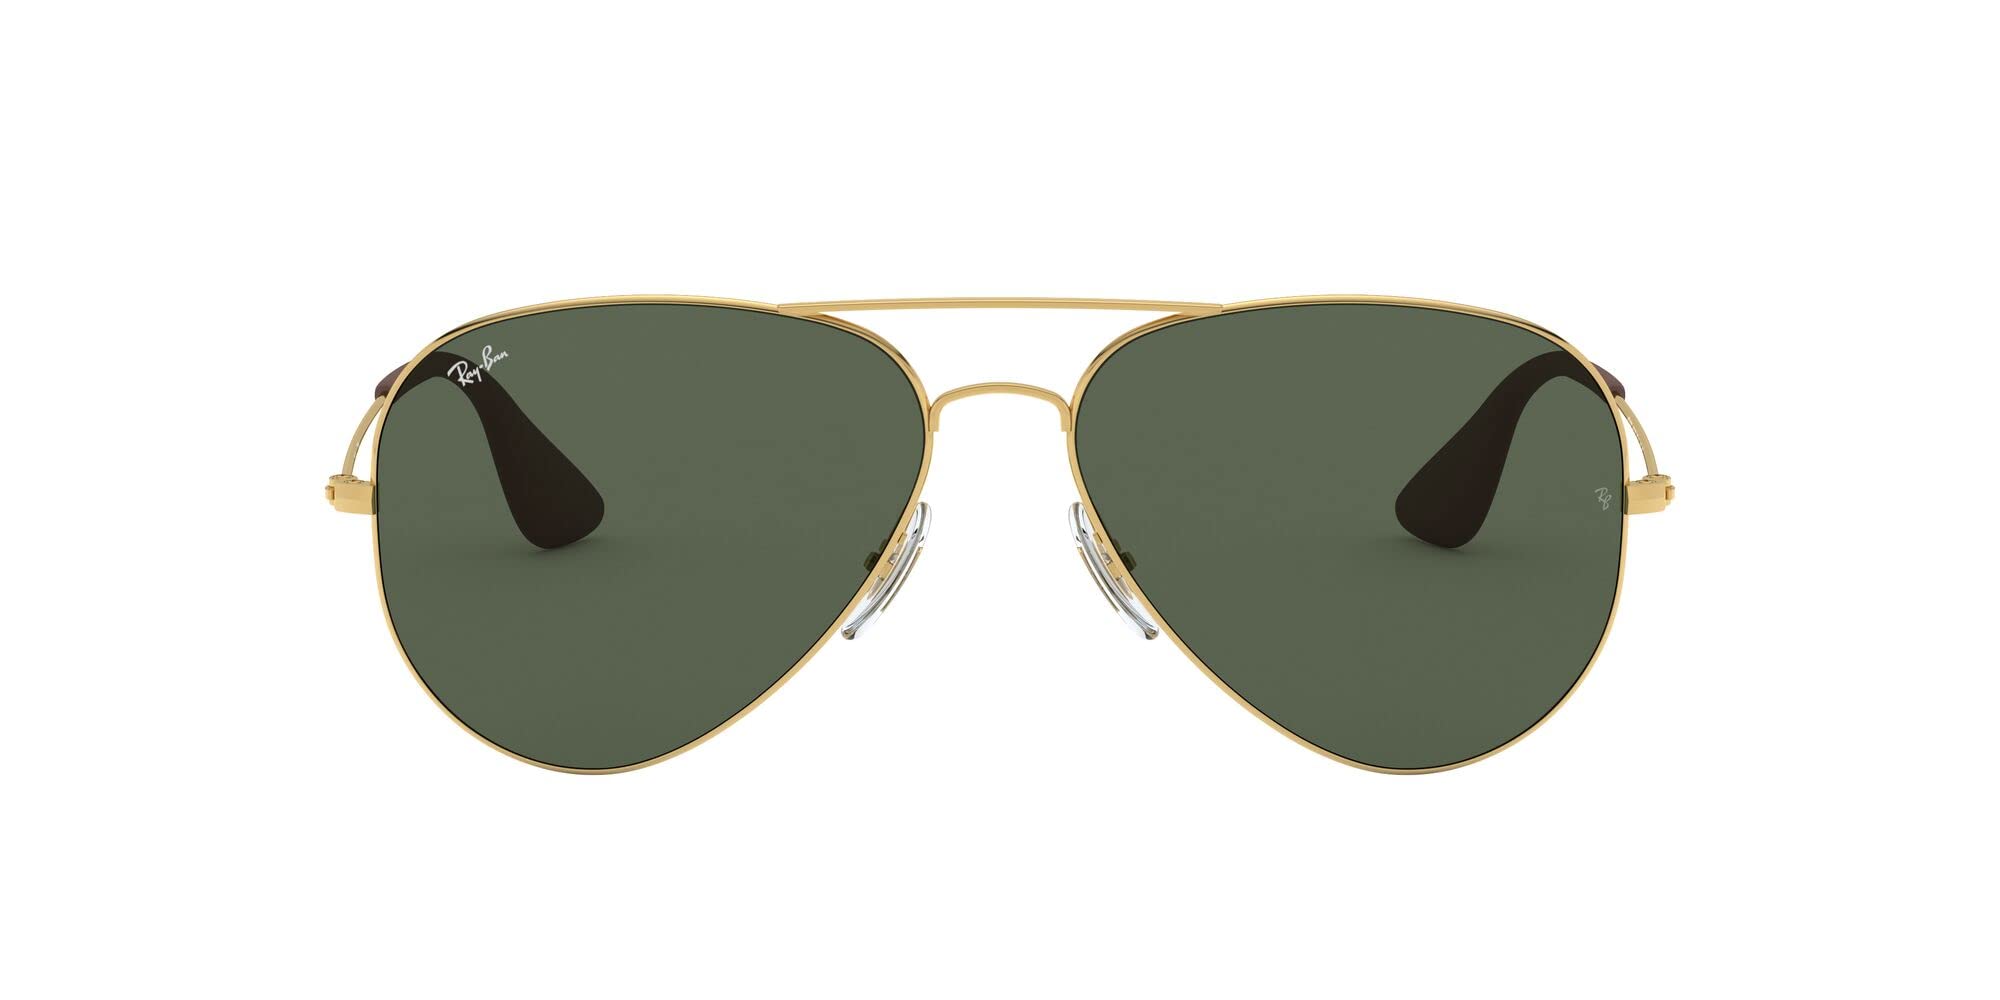 $85.50: Ray-Ban Rb3558 Aviator Sunglasses